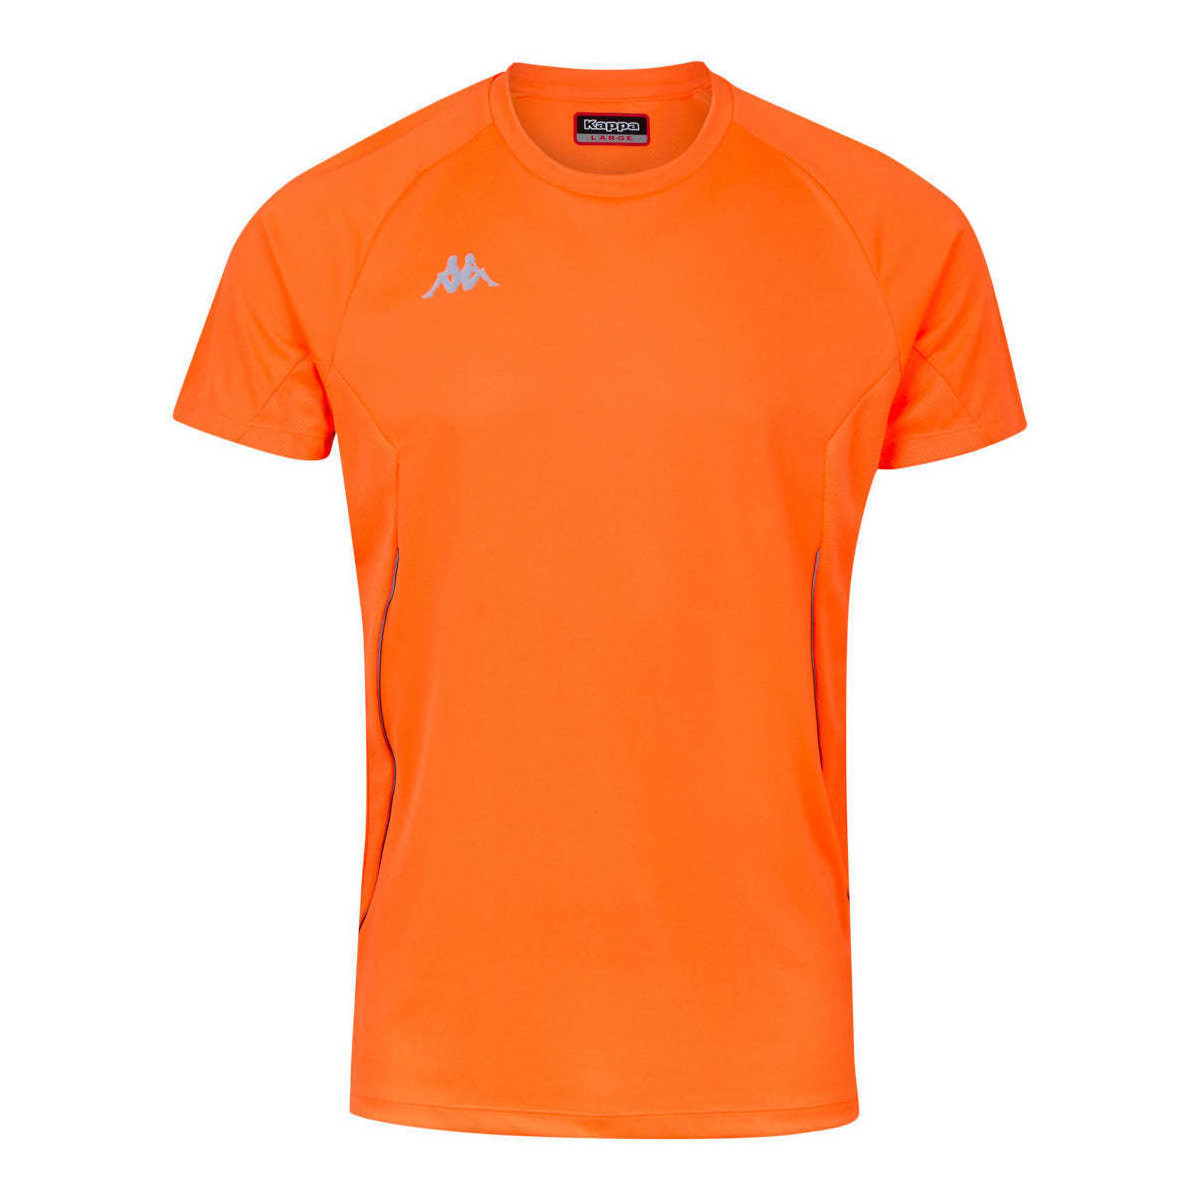 Kappa Orange T-shirt Fanio jHpEU0an